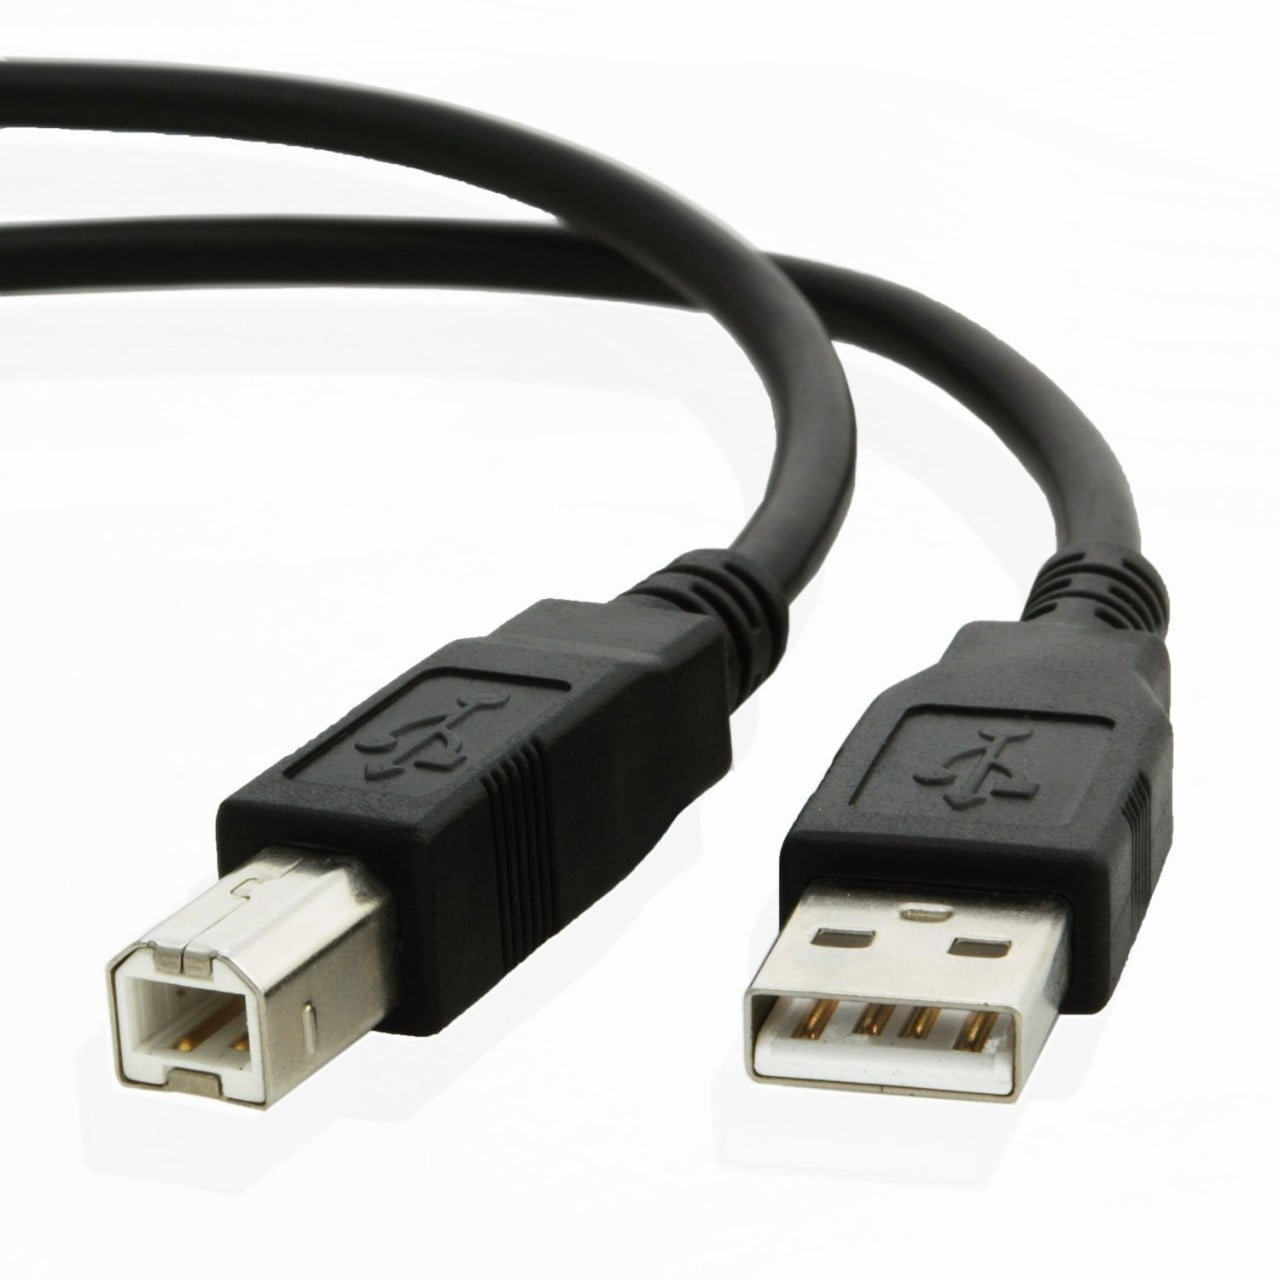 Los Uitgaan veteraan ReadyWired USB Cable Cord for HP Deskjet 3755, F2110, D1460, 1010, 1112,  2130, F2480 Printer - 10 Feet - Walmart.com